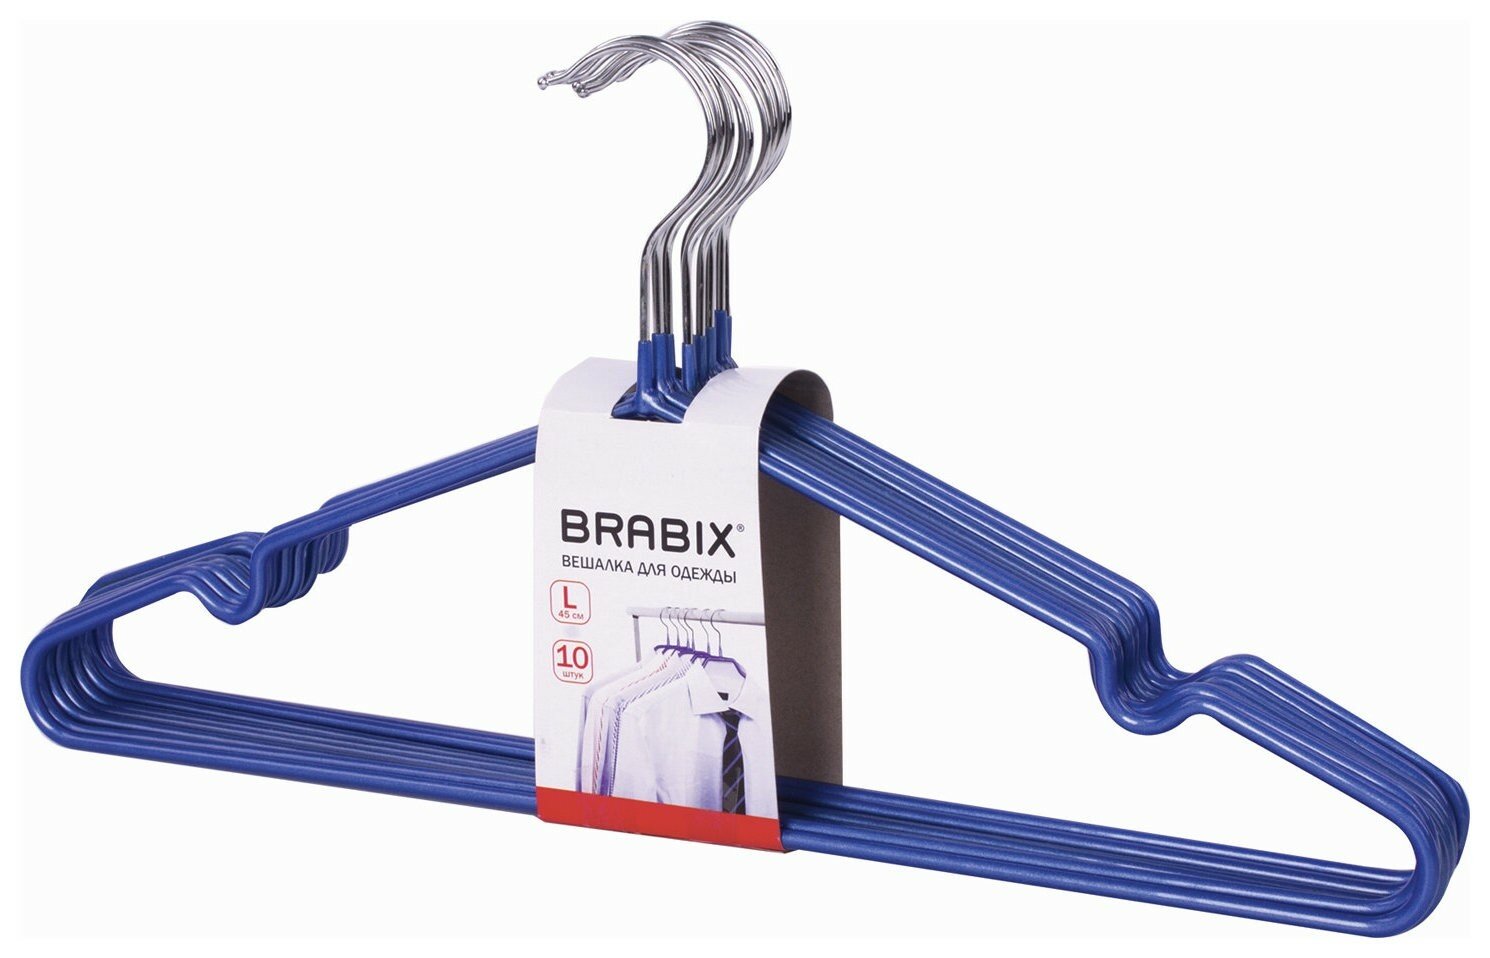 Вешалки-плечики BRABIX Стандарт комплект 10 шт, металл/ПВХ, 45 см, цвет синий 601166